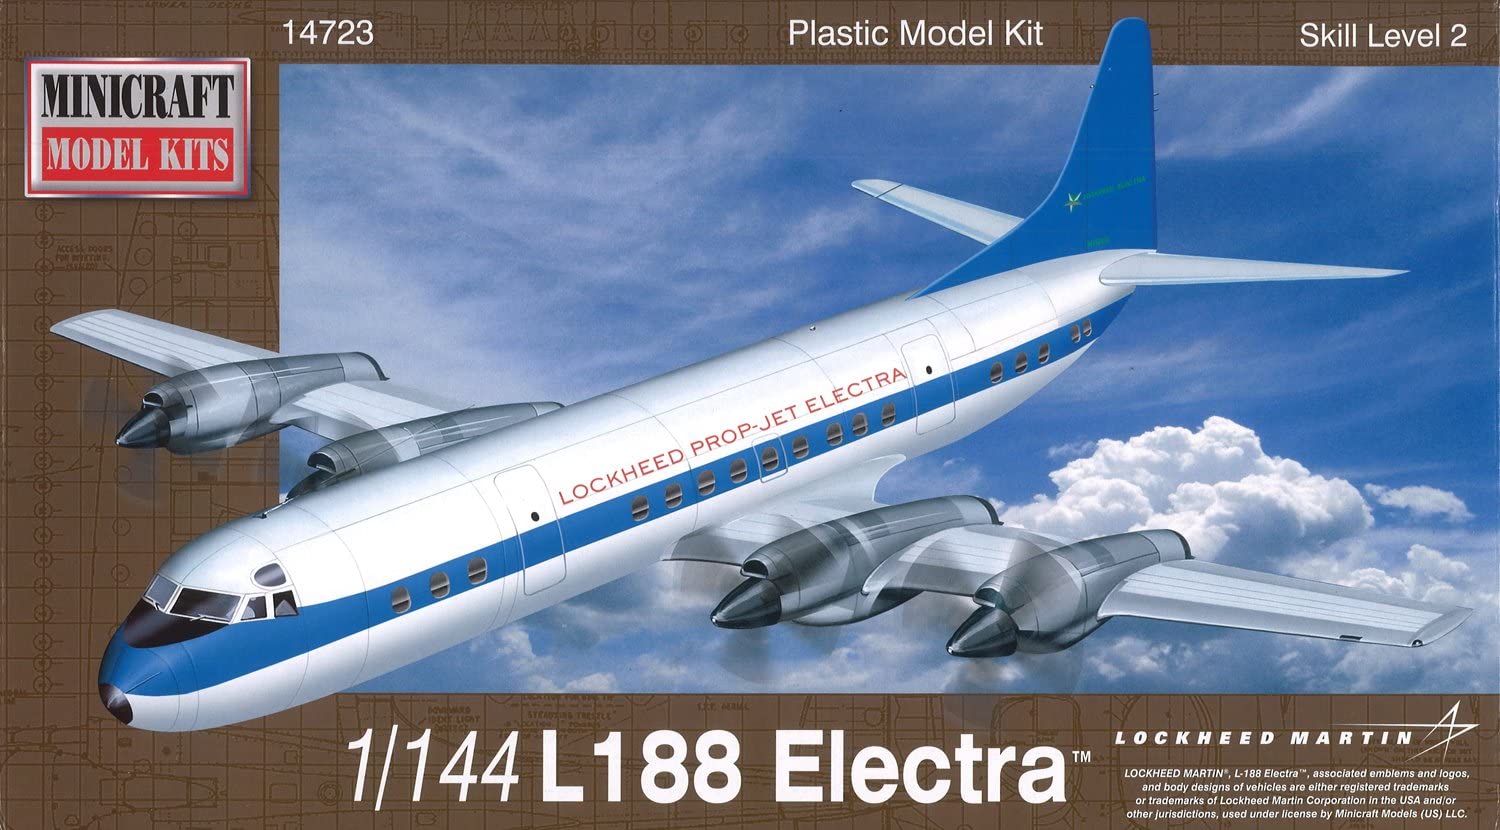 Minicraft Model Kits 1/144 L188 Electra 14723